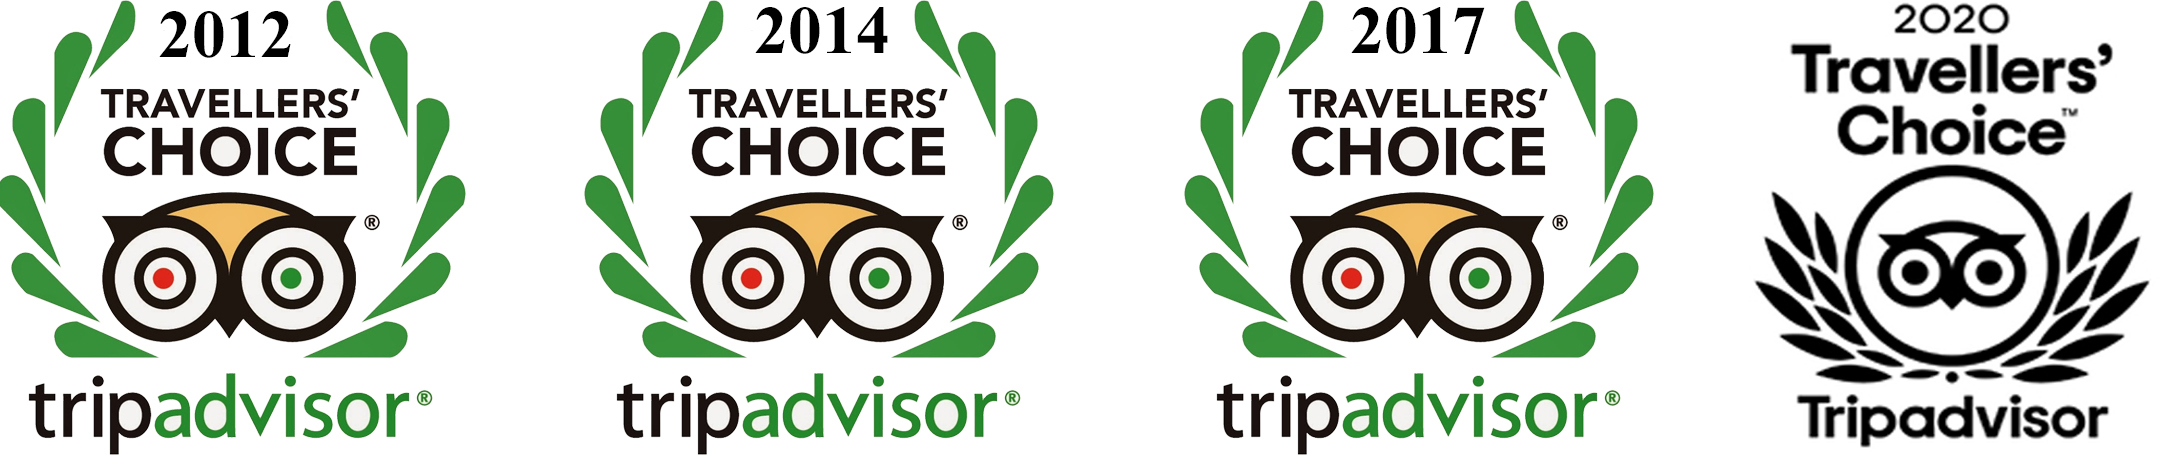 The LimeTree Hotel TripAdvisor Awards